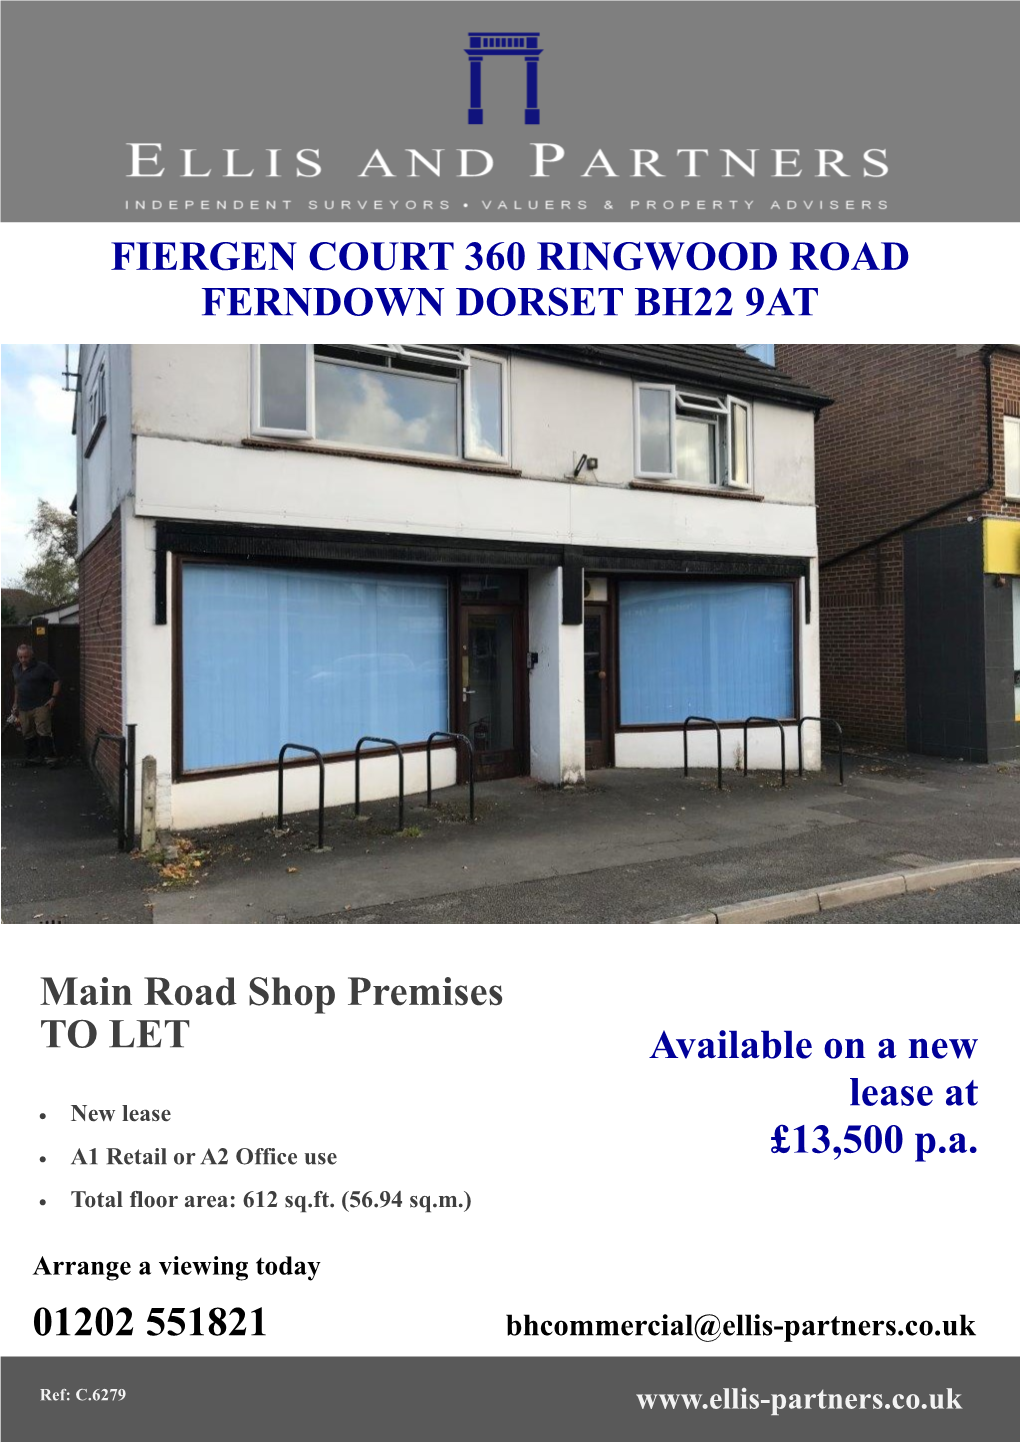 Fiergen Court 360 Ringwood Road Ferndown Dorset Bh22 9At